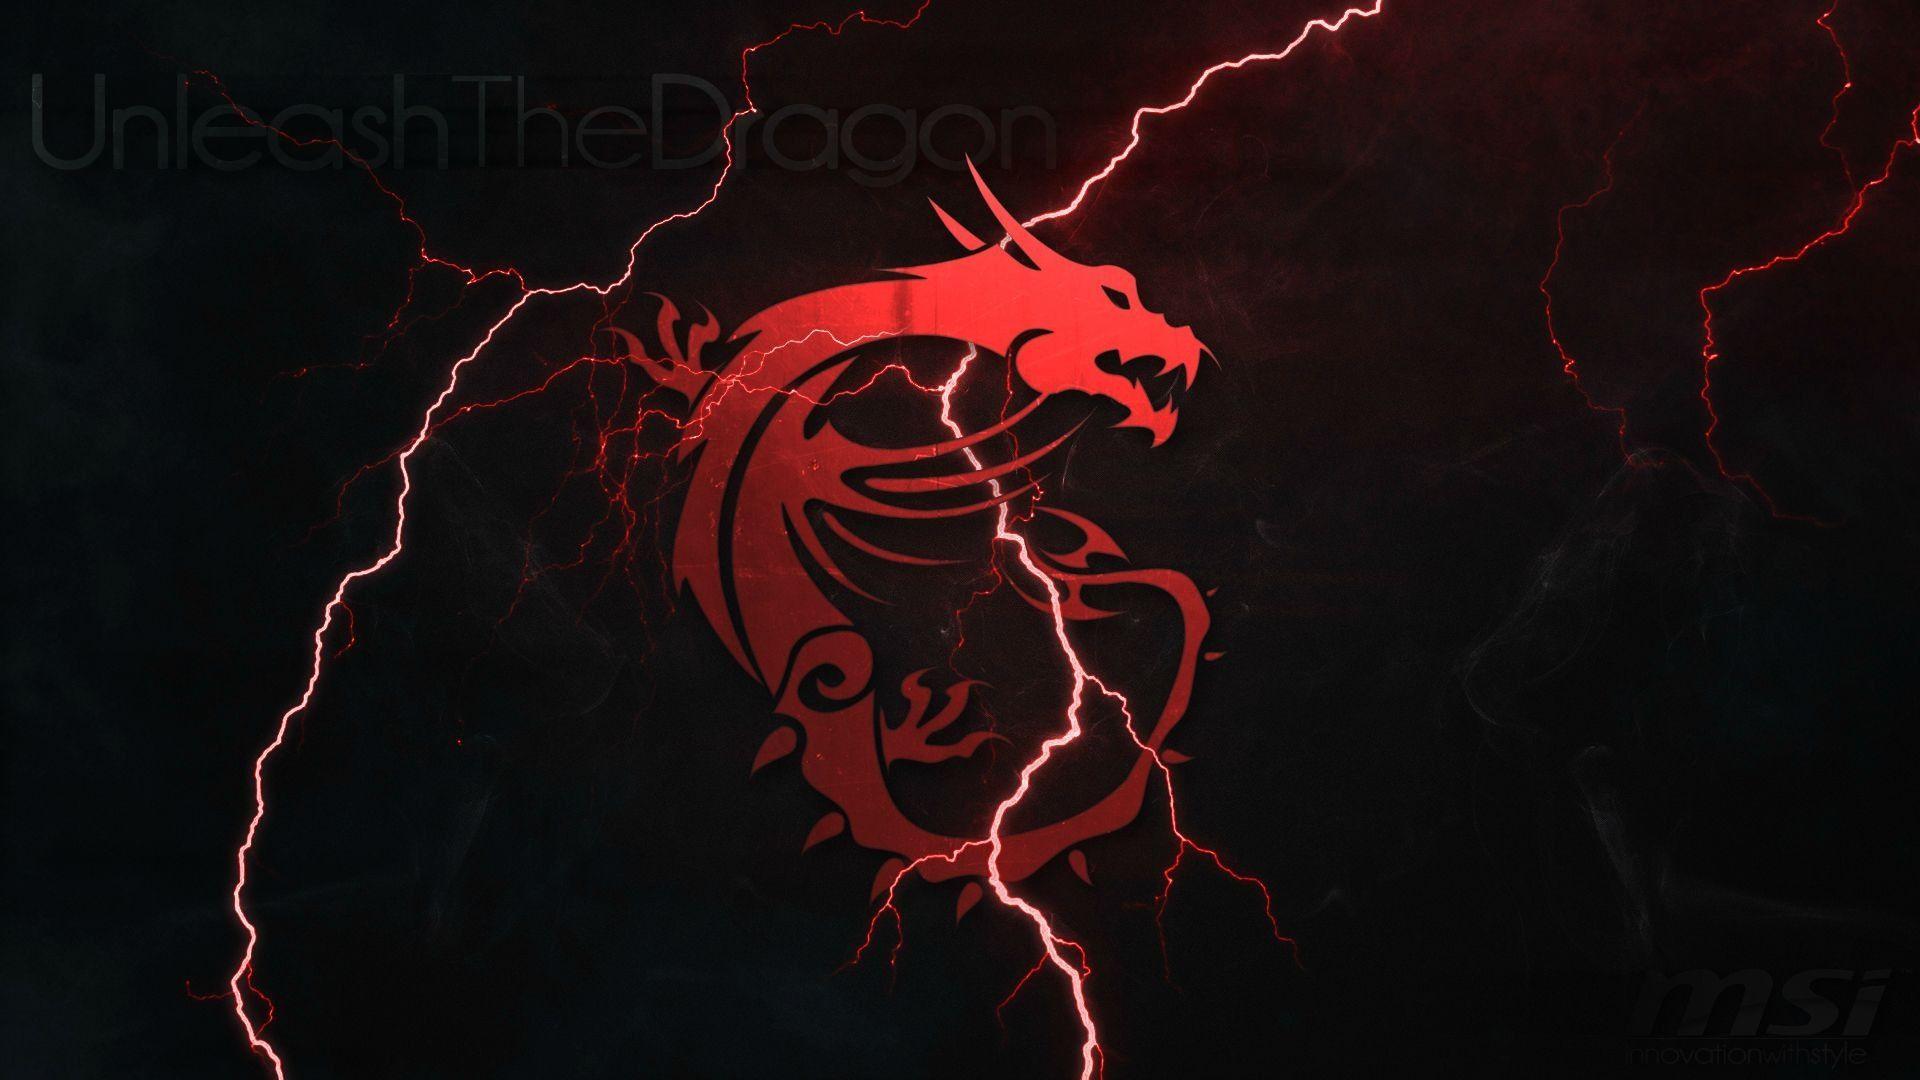 Dragon Logo MSI Dark Backgrounds h7 HD Wallpapers